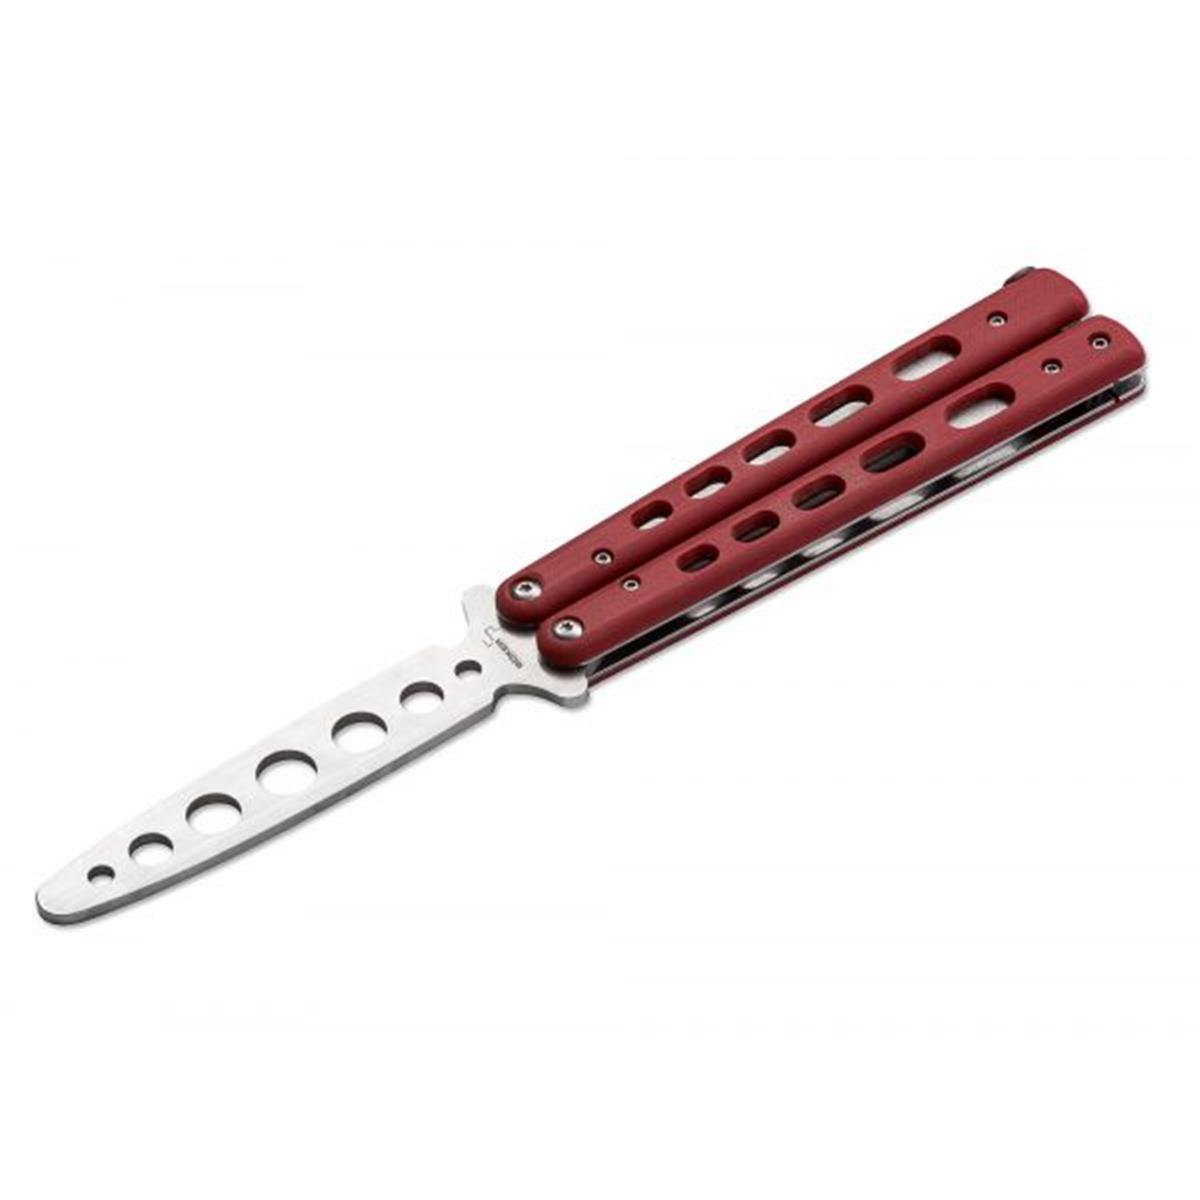 01bo712 Balisong Trainer Pocket Knife - Red